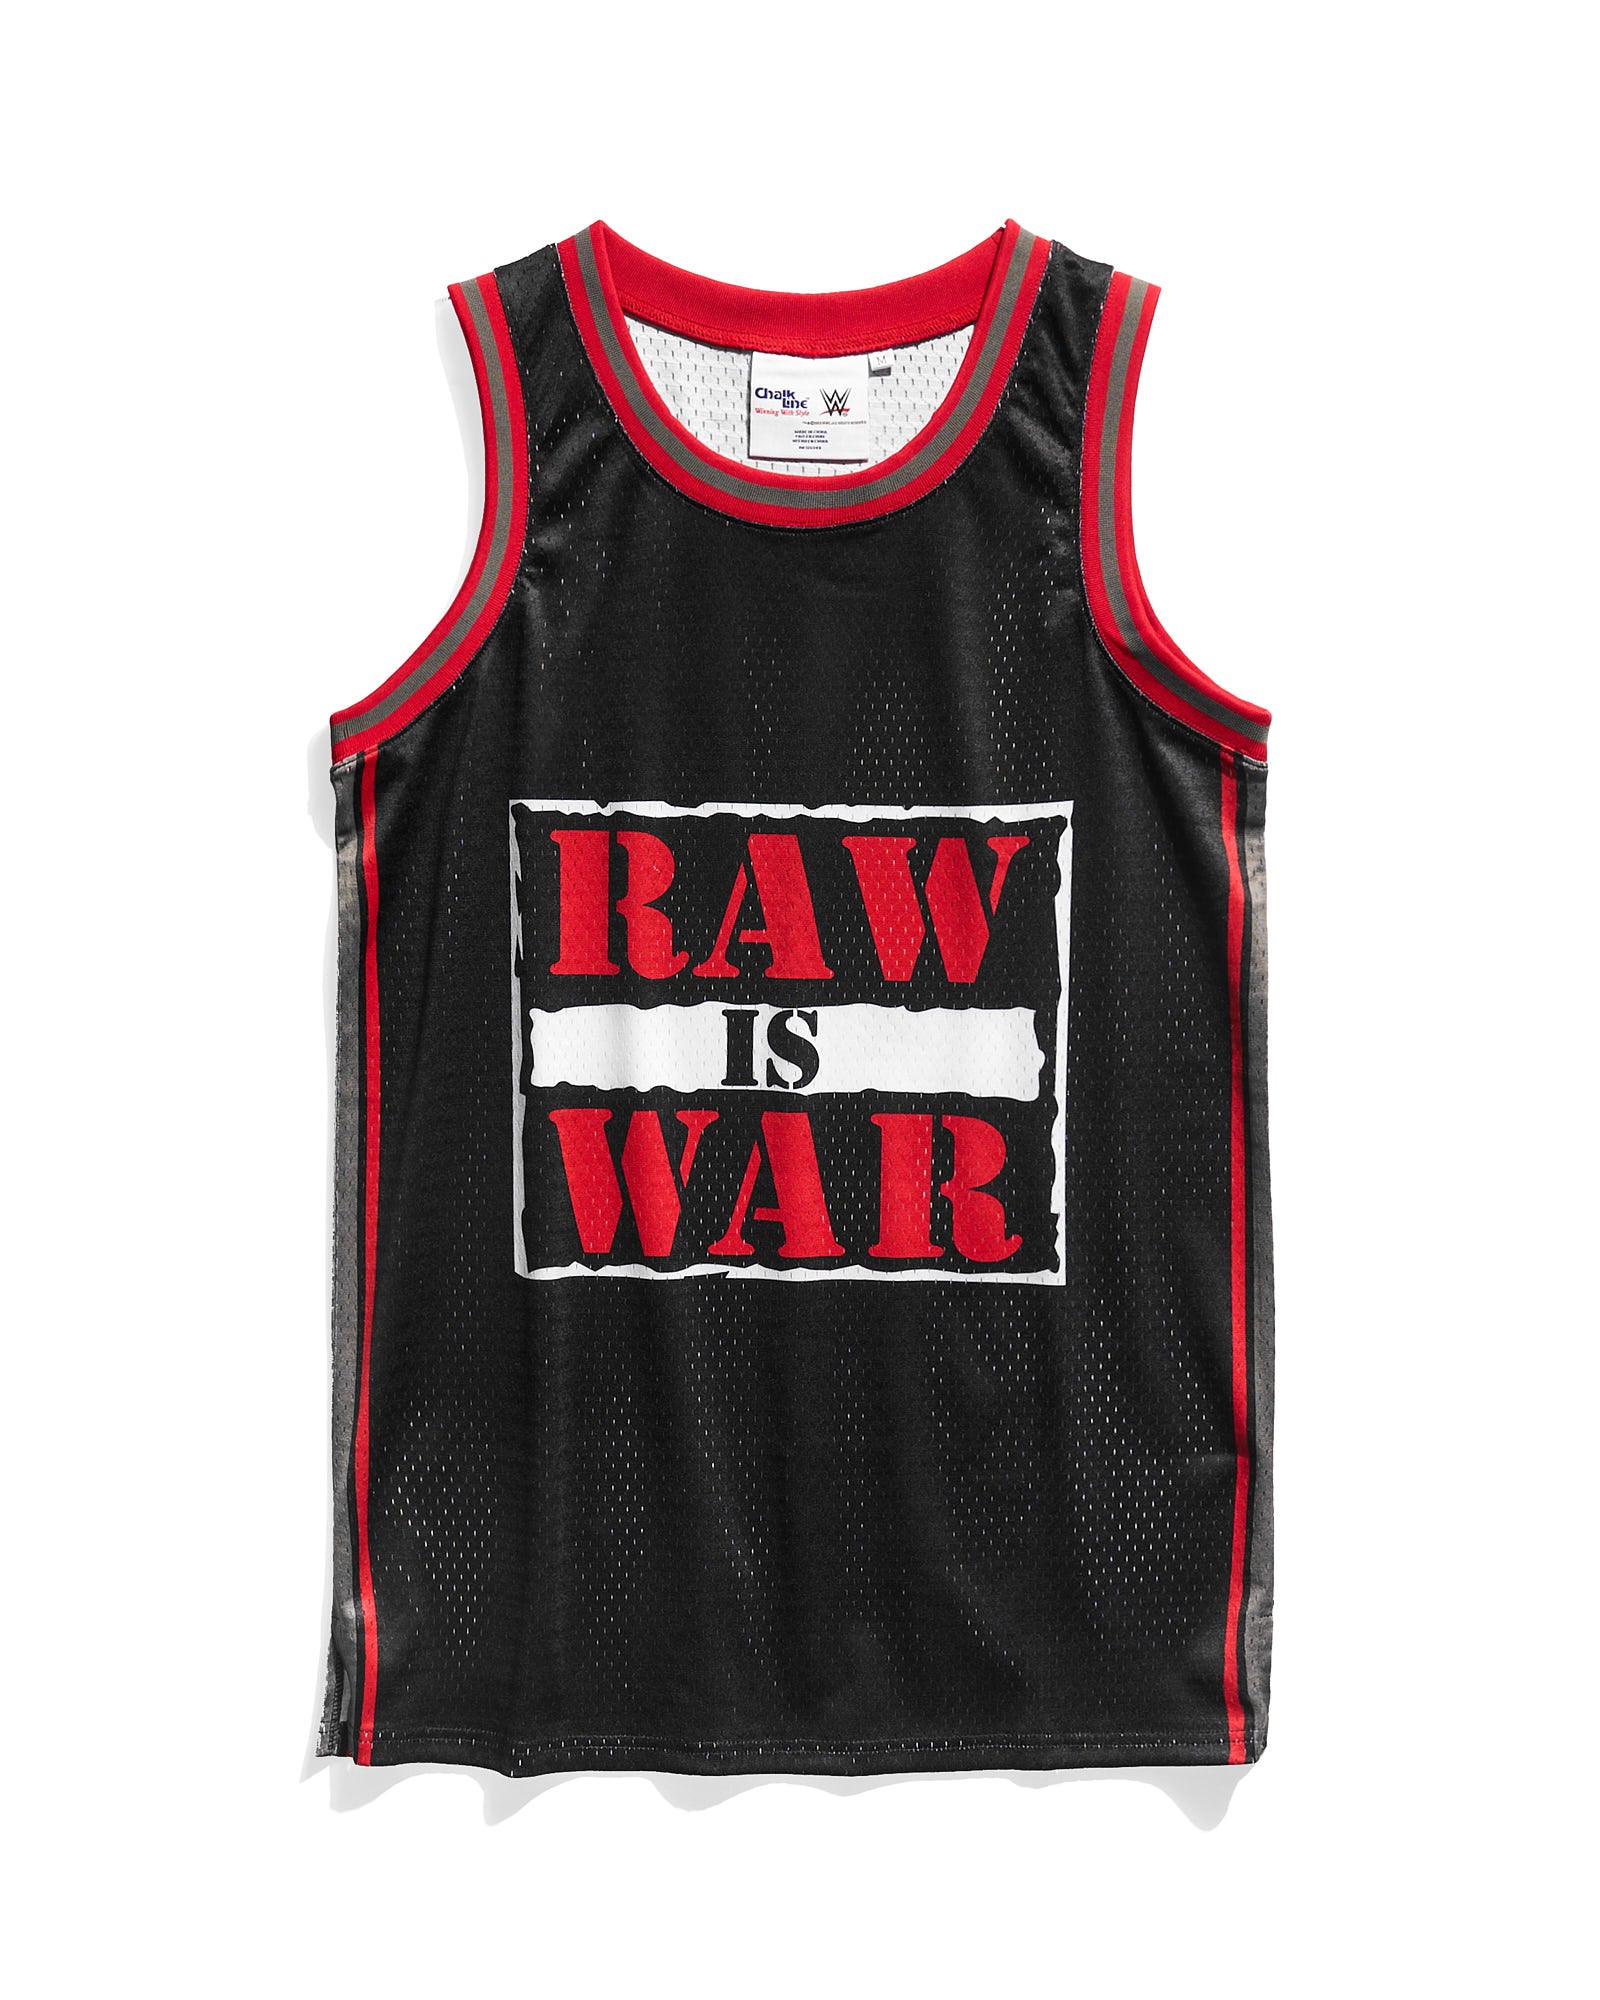 WWE Raw is War Venice Jersey